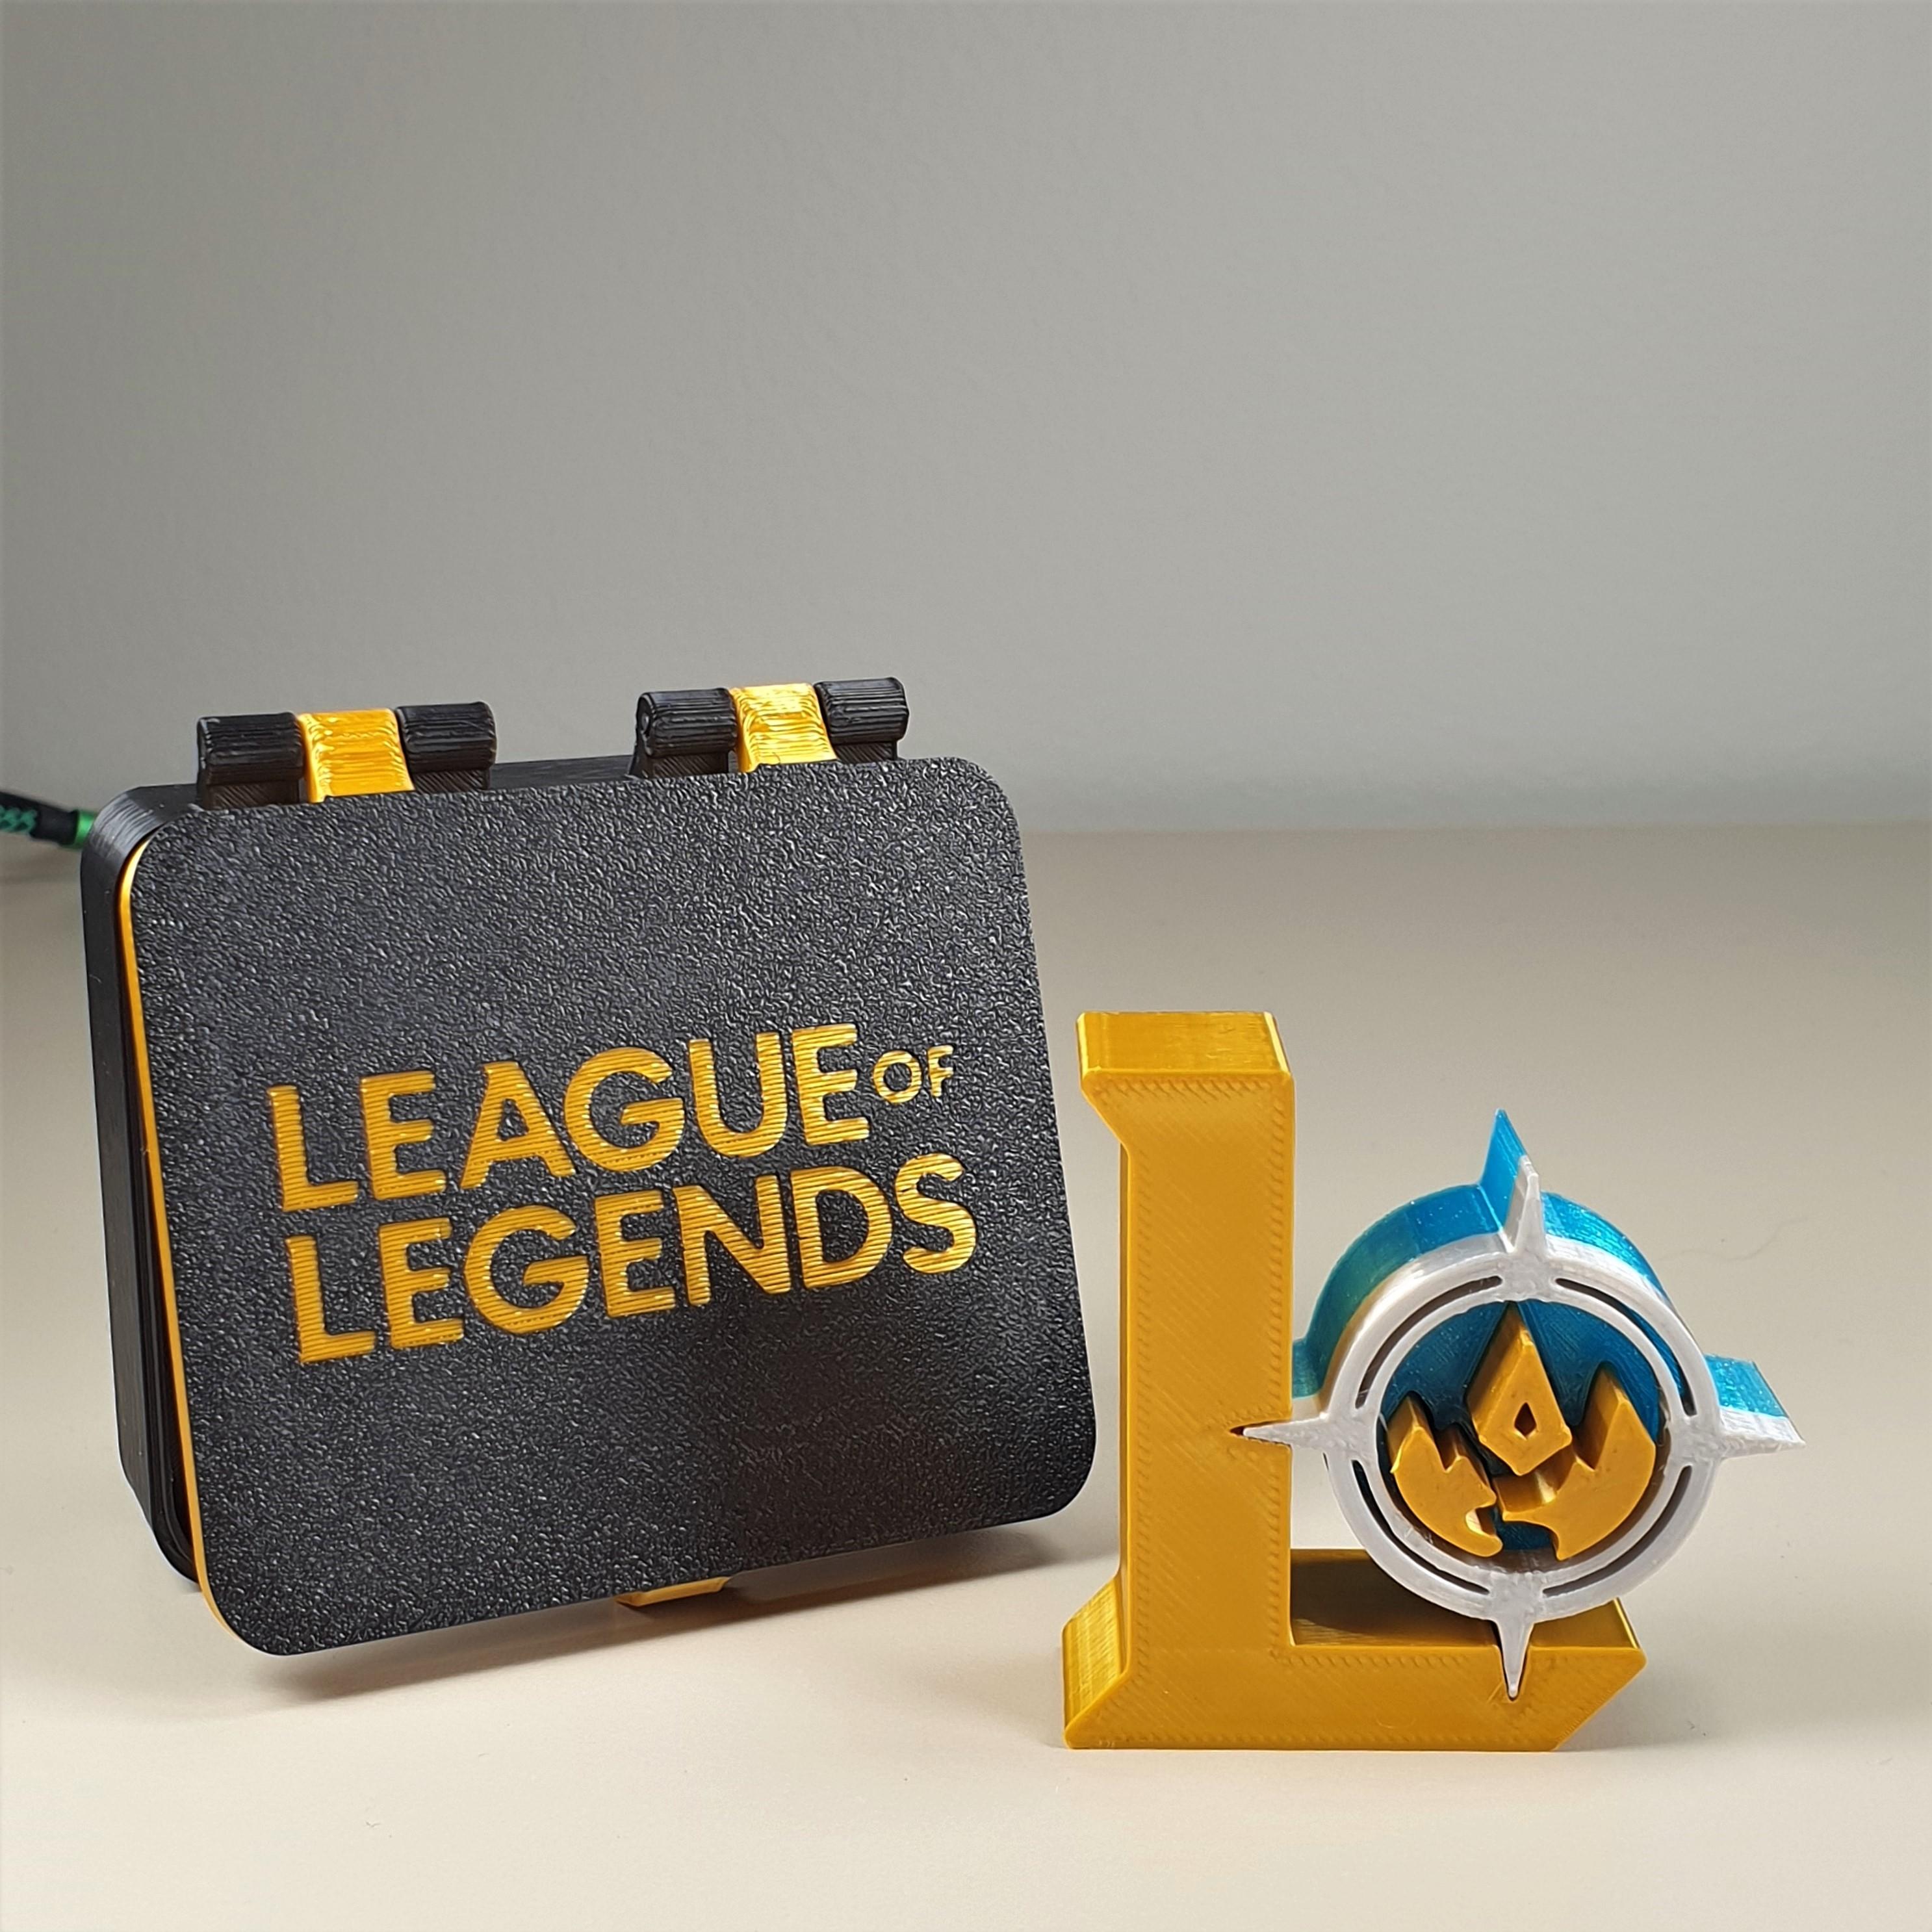 League of Legends in a box 3d model